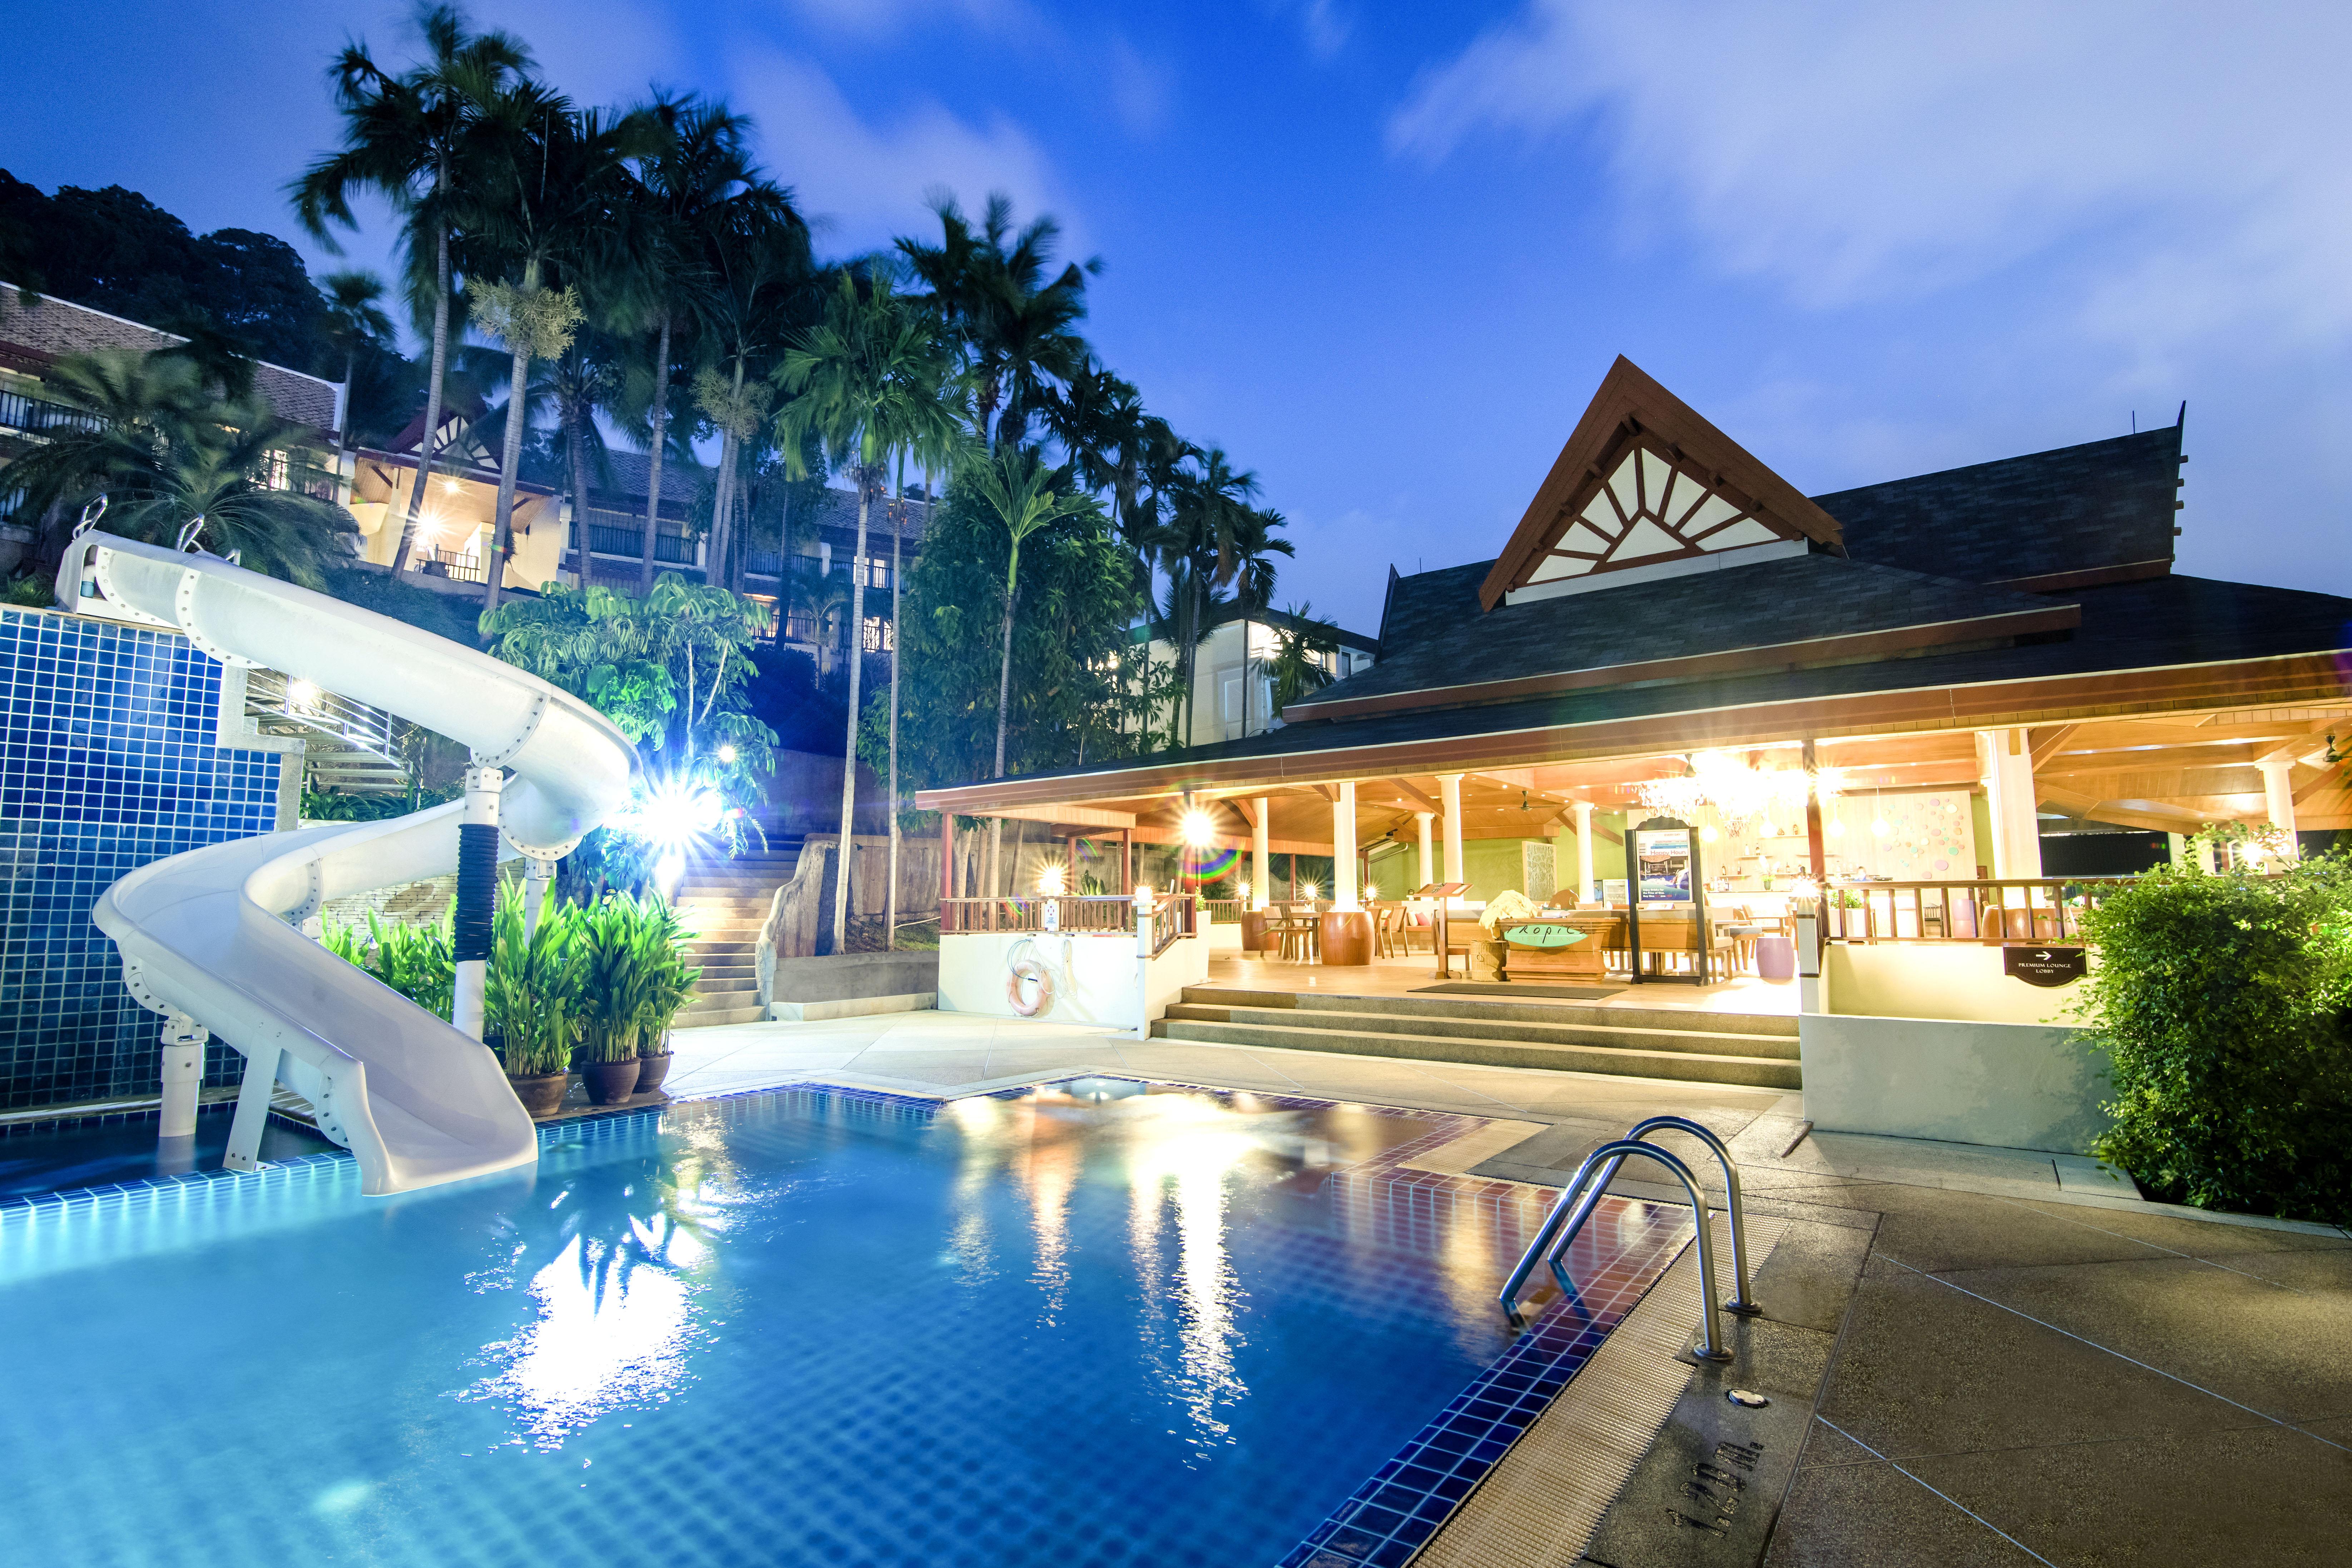 Tai 4. Centara Пхукет Патонг. Centara Blue Marine Resort & Spa Phuket) 4*. Андамантра Резорт вилла Пхукет. Andamantra Resort & Villa (ex. Centara Blue Marine Resort & Spa Phuket).